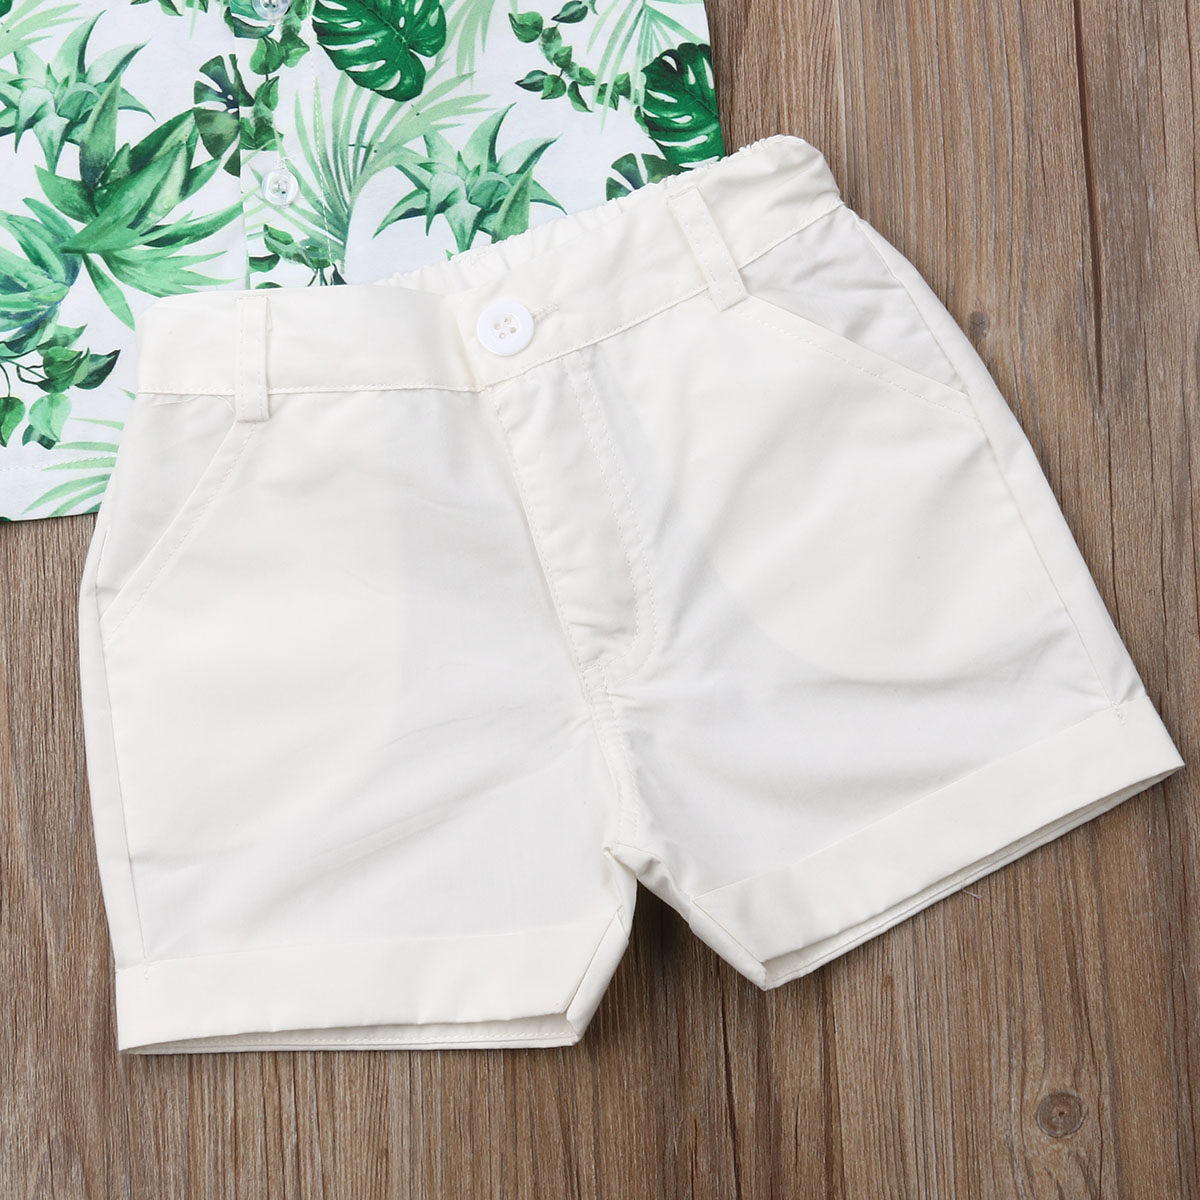 New 2PCS Toddler Kid Baby Boy Gentleman Shirt Top+Pants Shorts Clothes Outfit Set